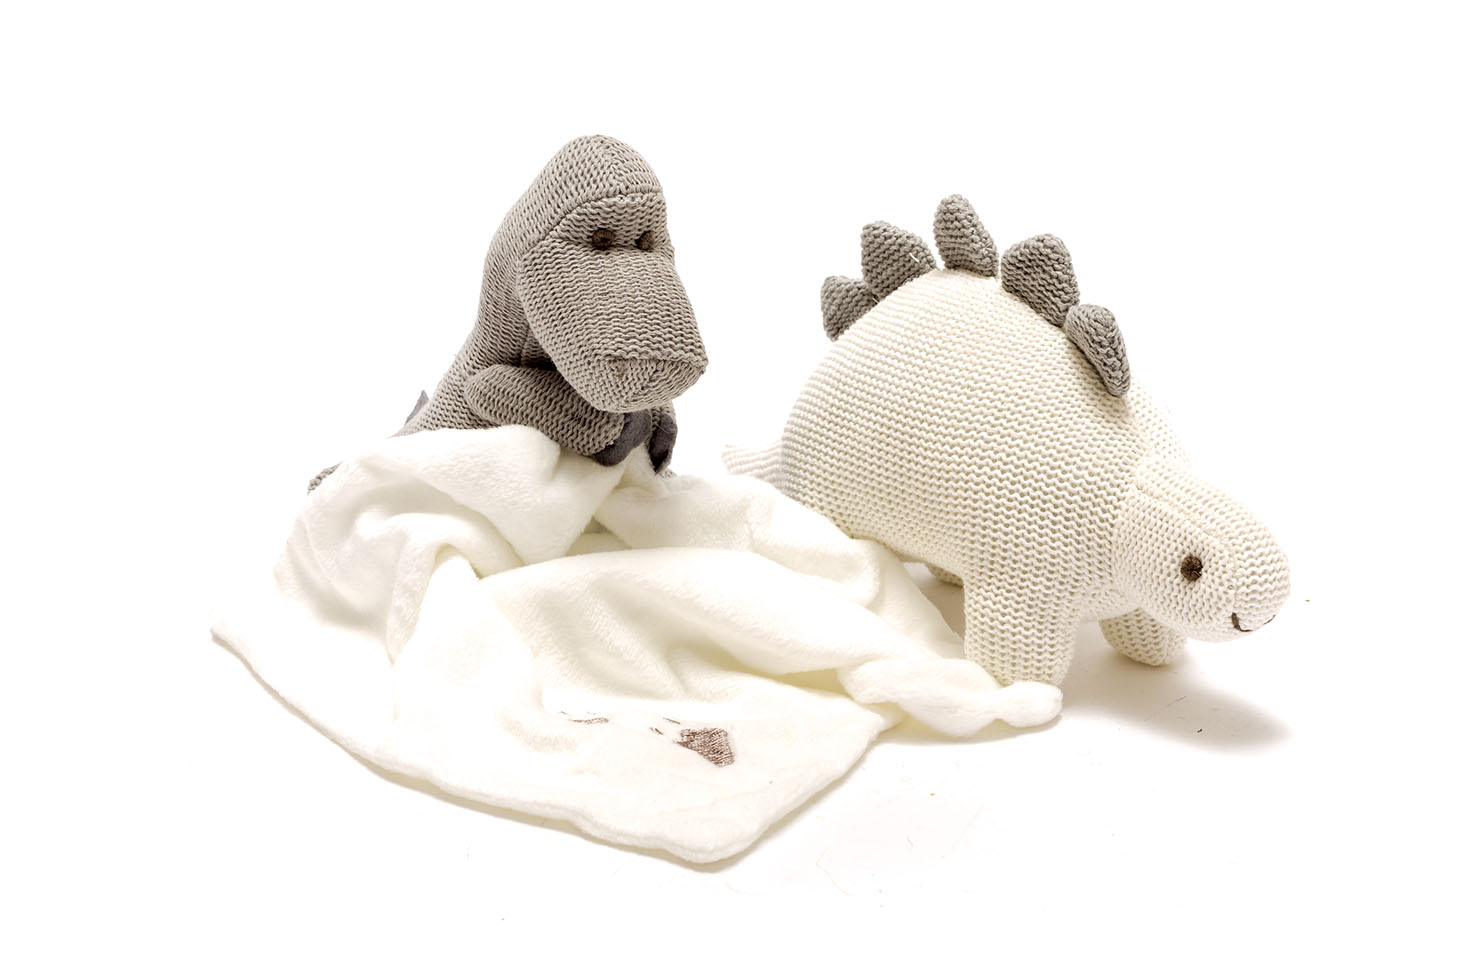 Looking for a Dinosaur Teddy as a new born baby gift? Our top 5 Dinosaur Teddies